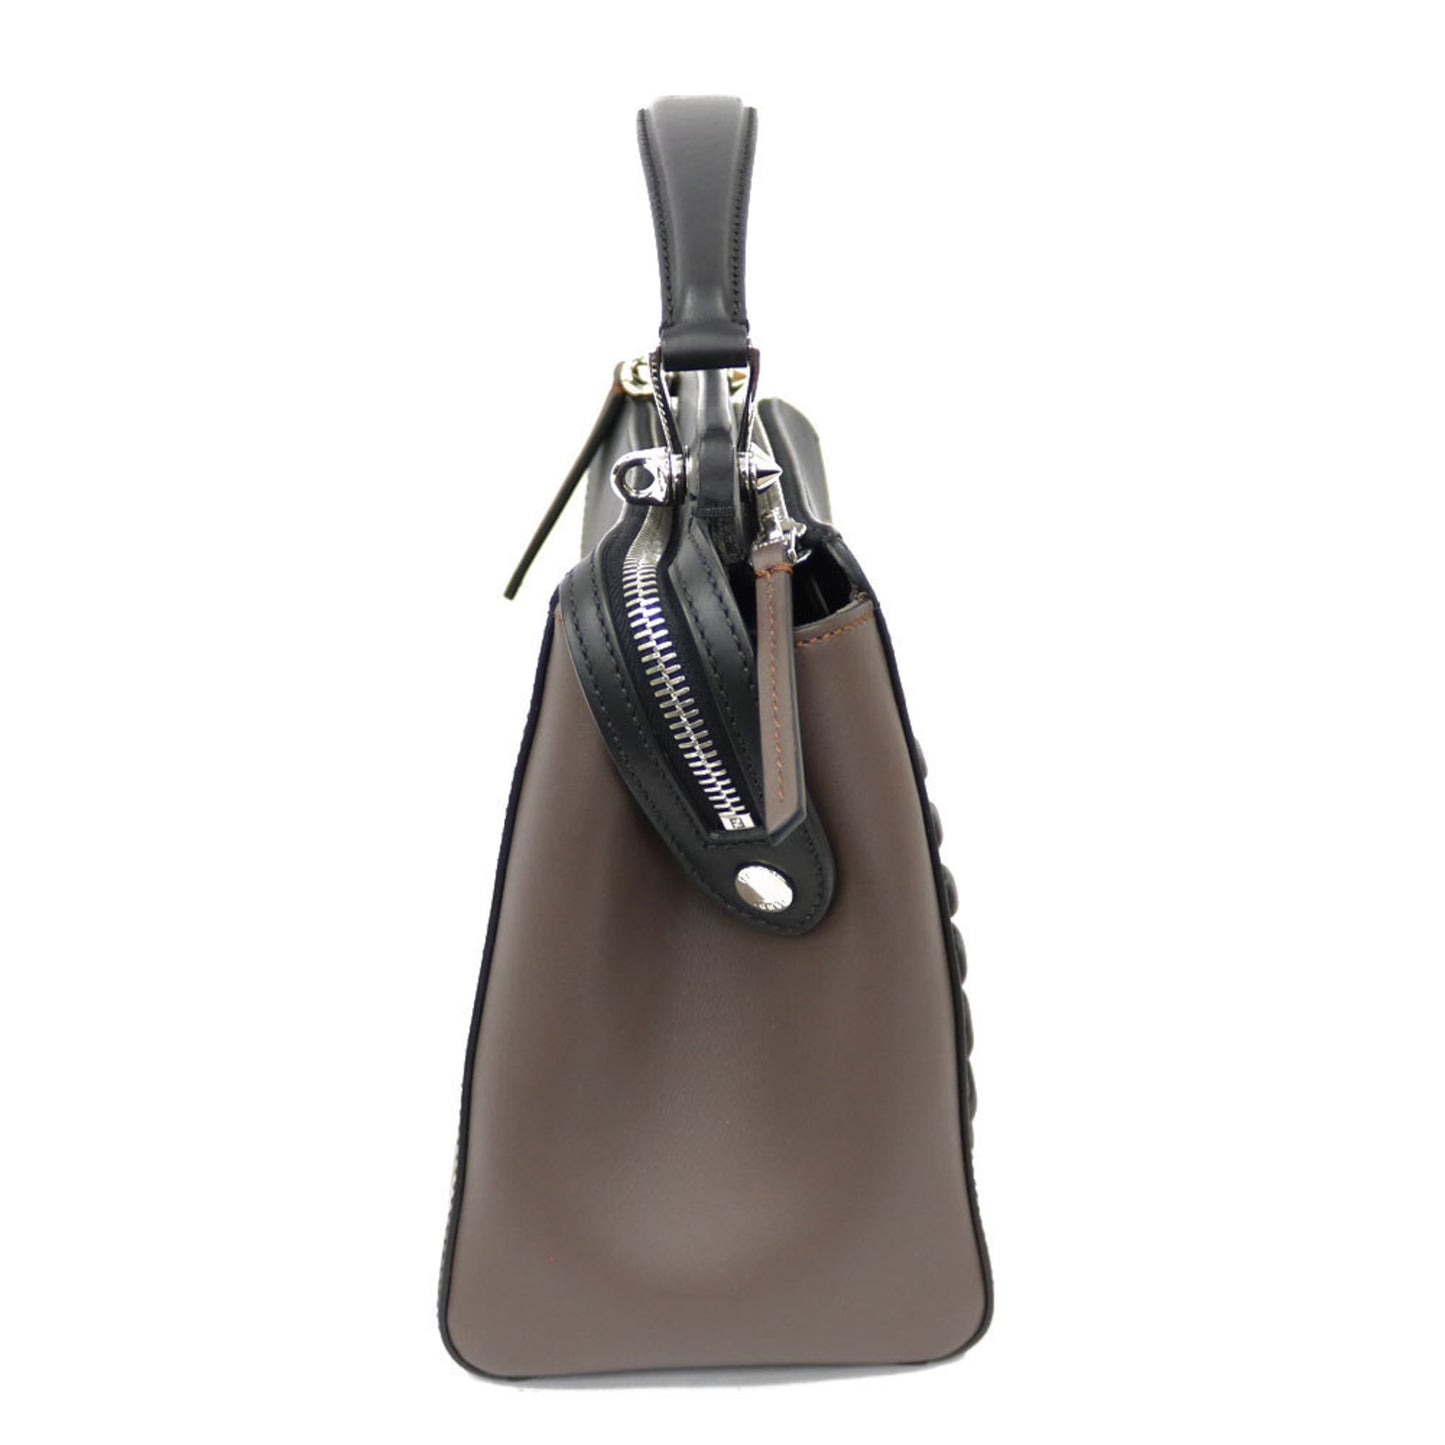 Fendi Women's Black Leather Dot Com Handbag by Fendi in Black